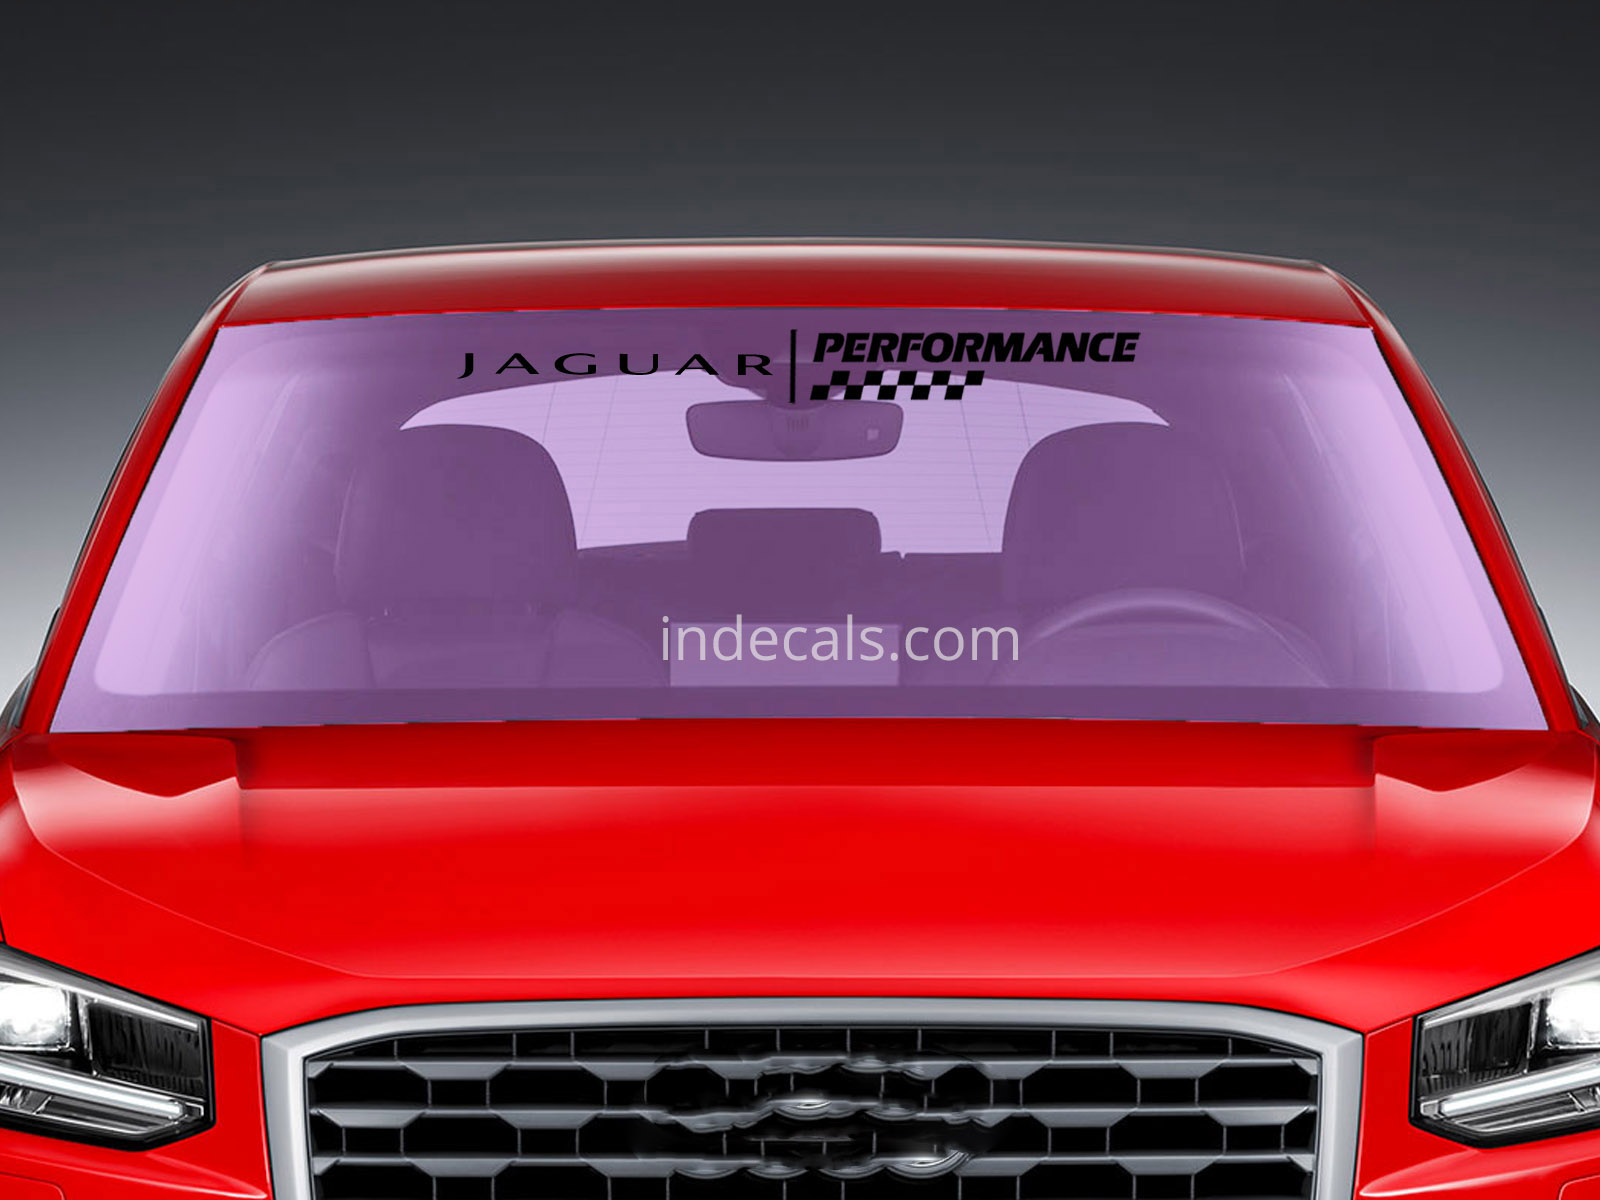 1 x Jaguar Performance Sticker for Windshield or Back Window - Black